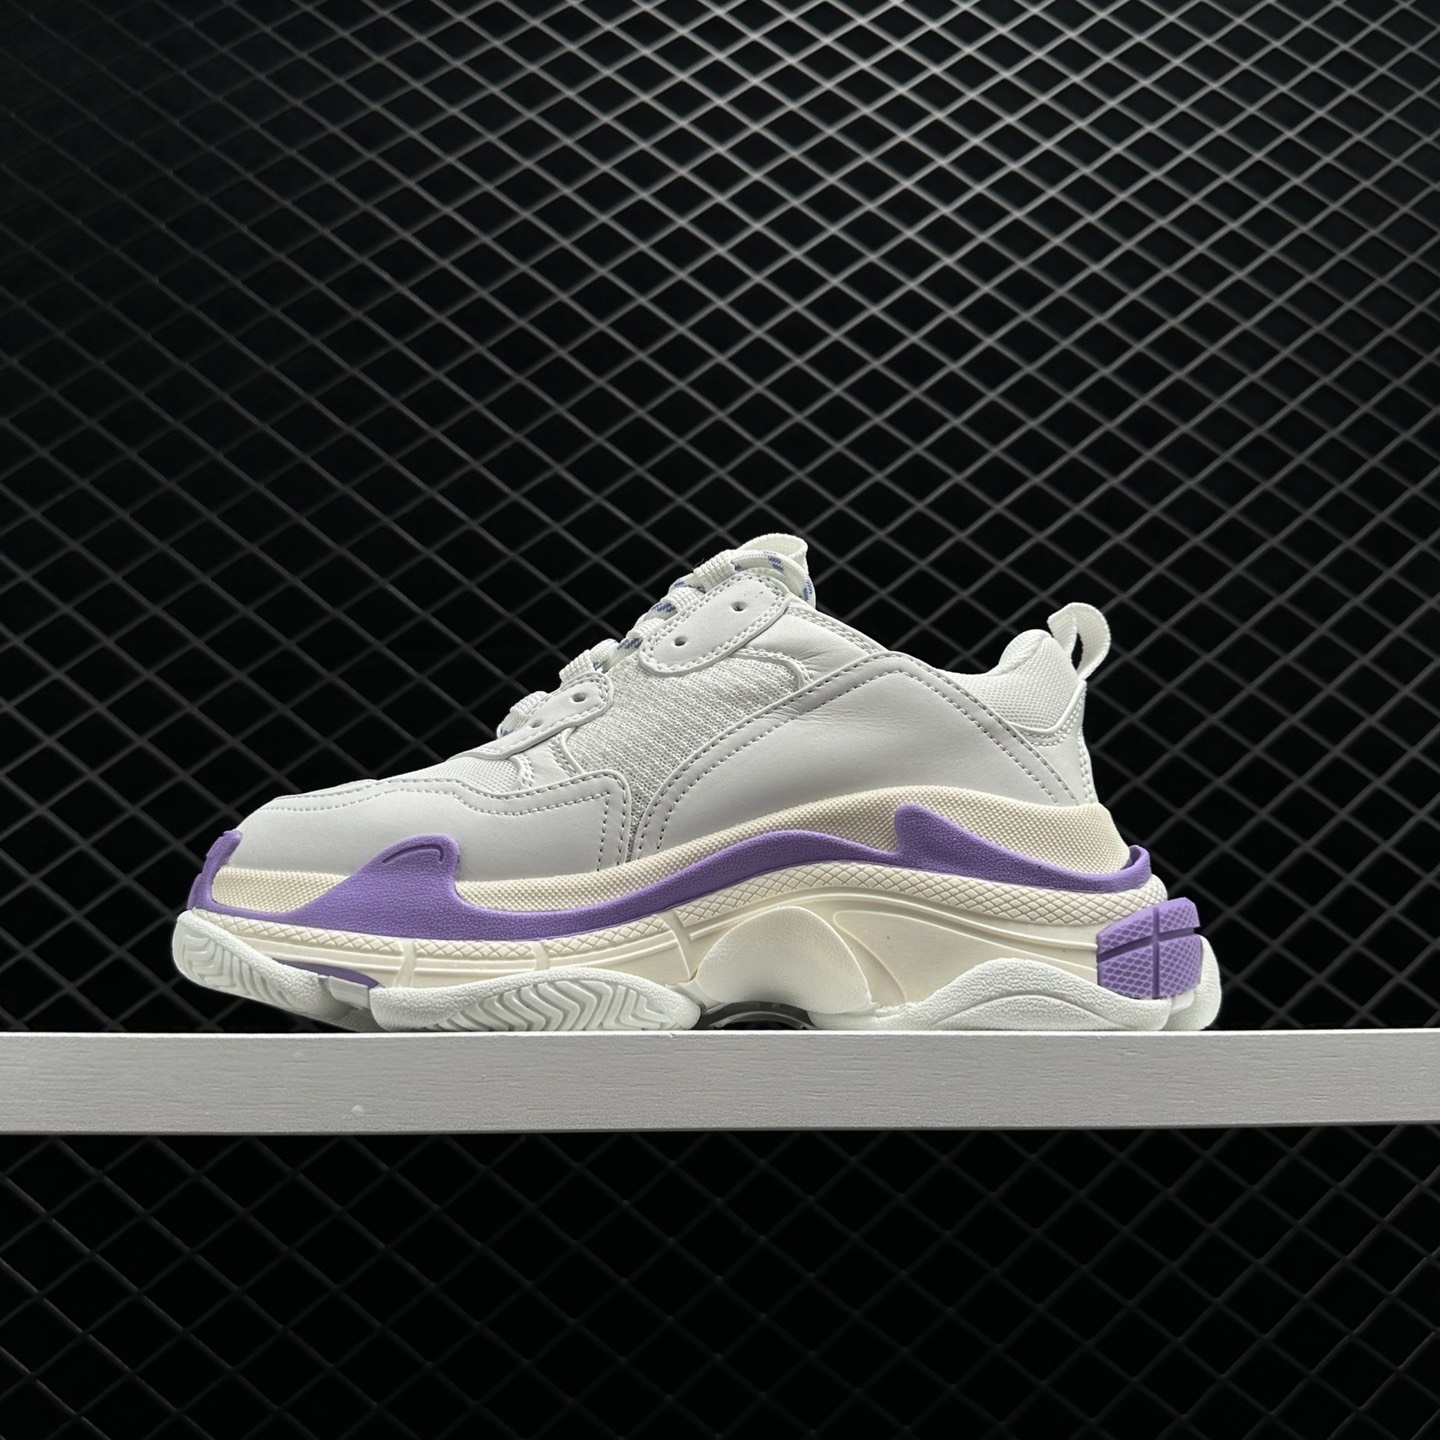 Balenciaga White Purple Triple S - Iconic Chunky Sneakers for Fashion Forward Individuals